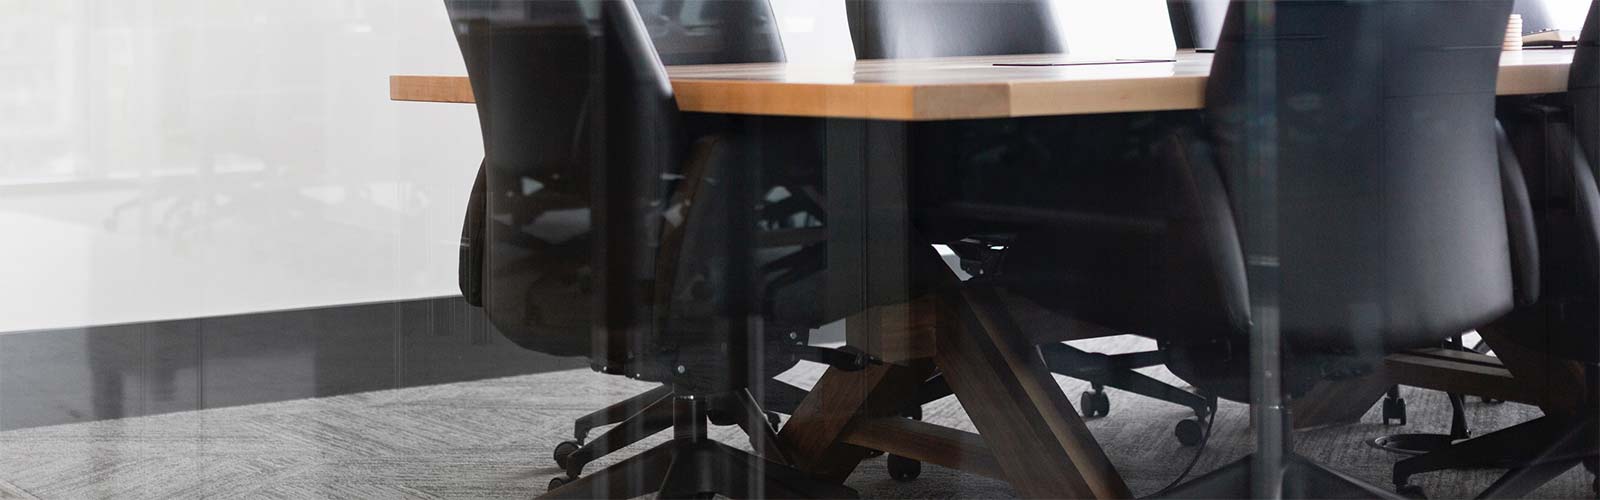 boardroomdesk blackleatherchairs